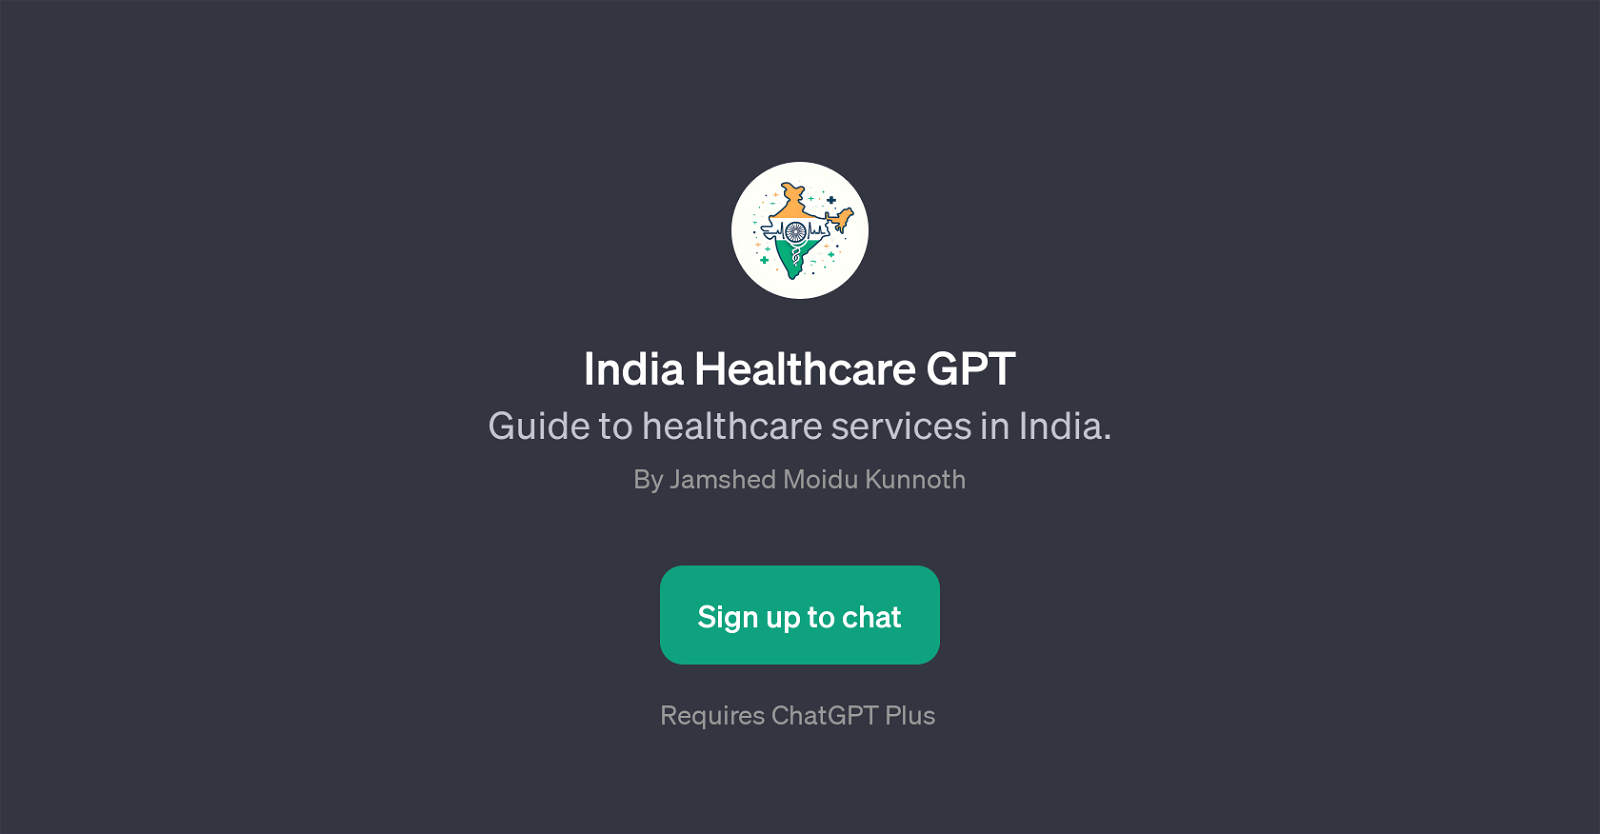 India Healthcare GPT website